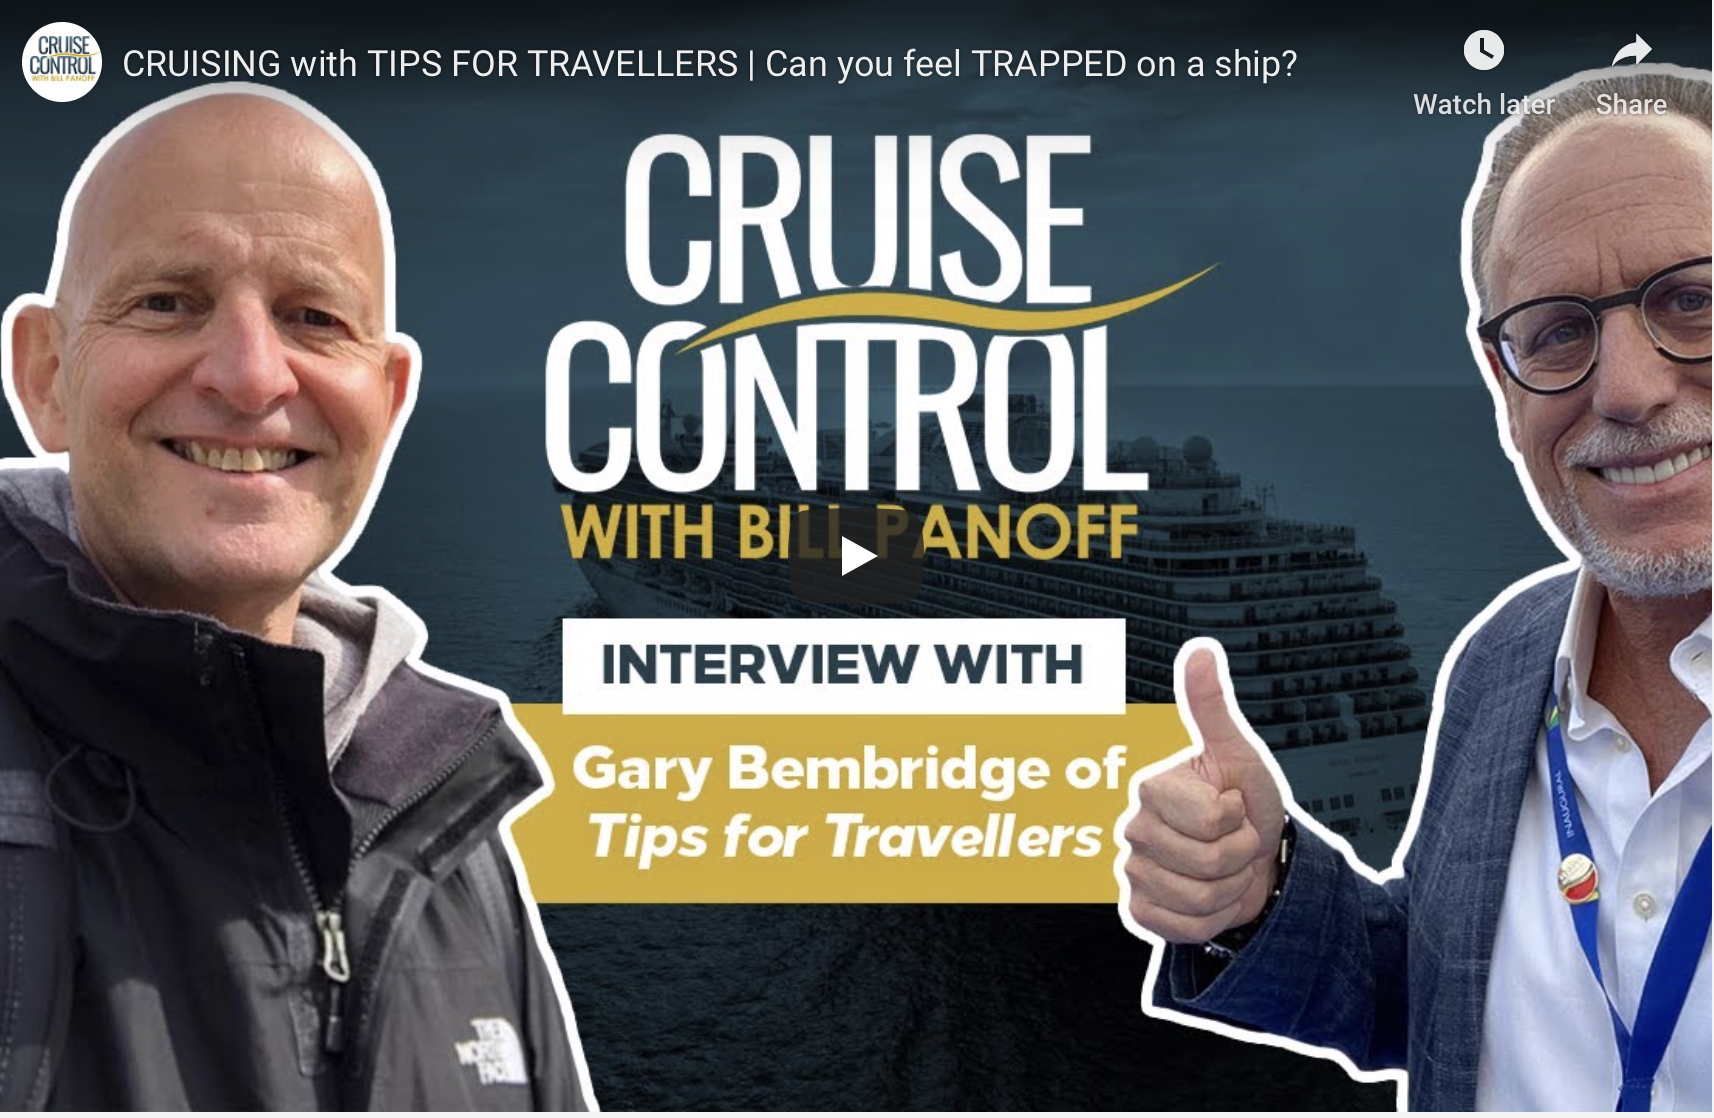 Cruise Control with Bill Panoff Interviews Gary Bembridge